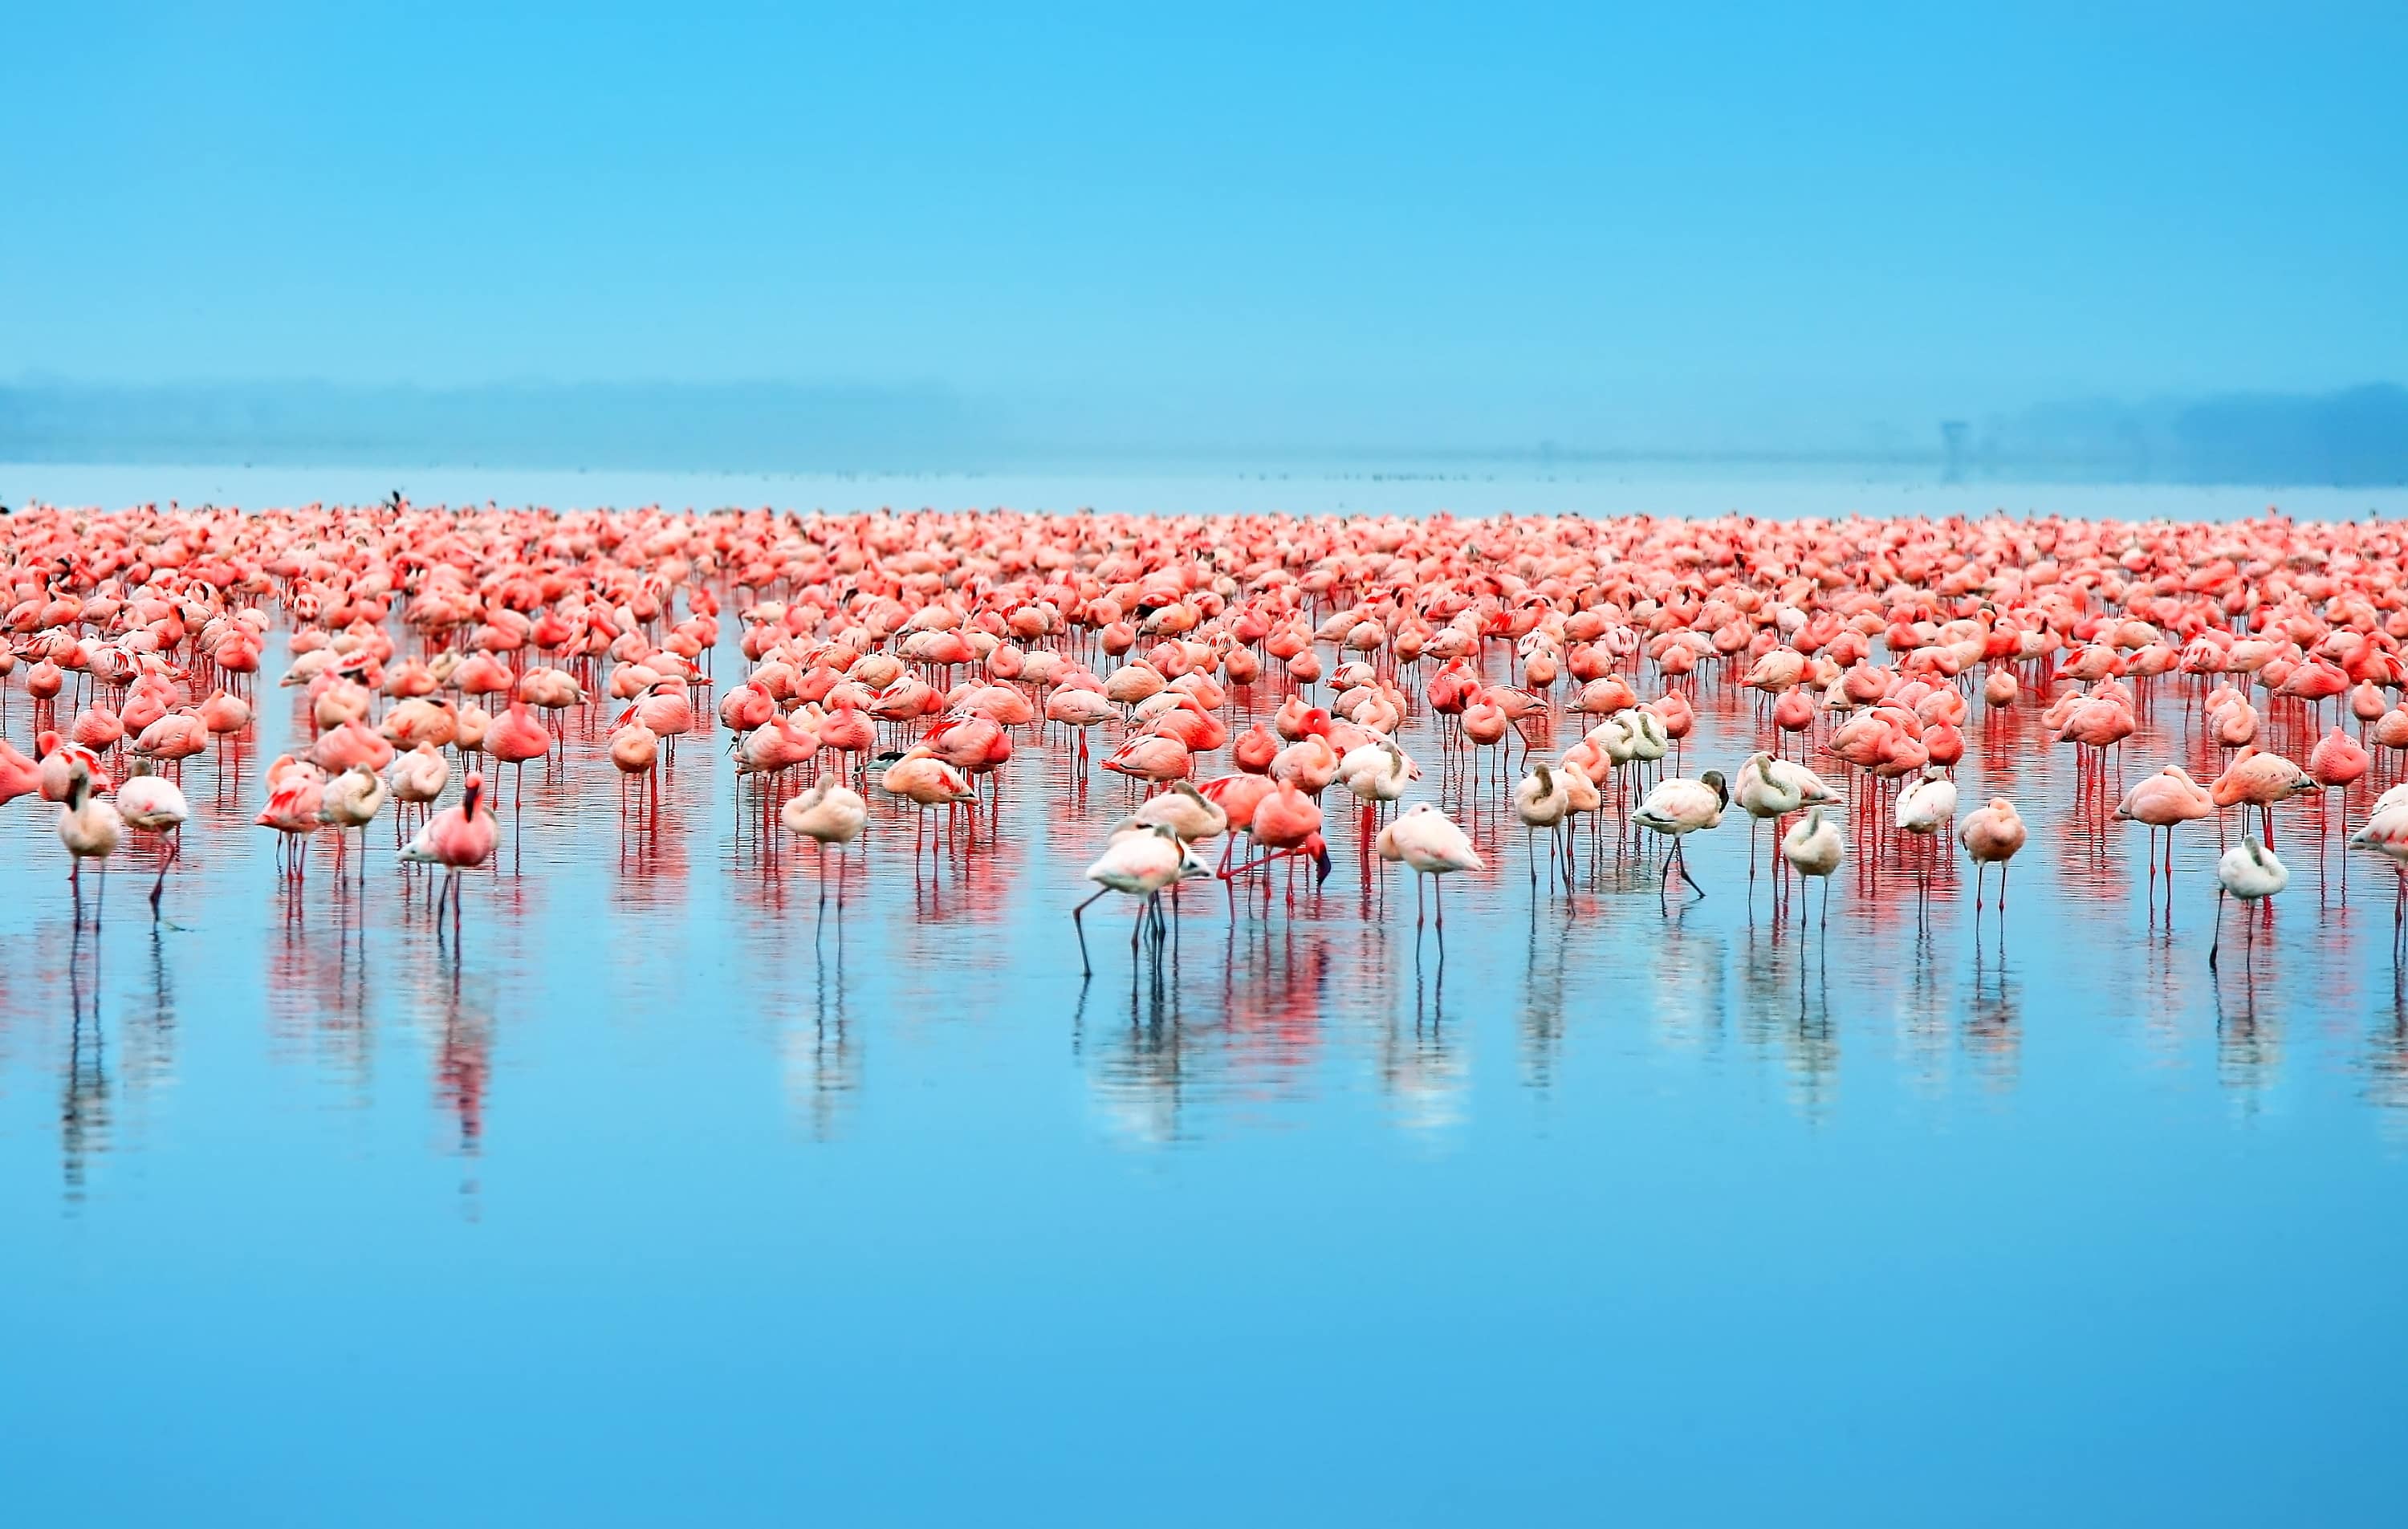 Flamingoes on lake in Kenya